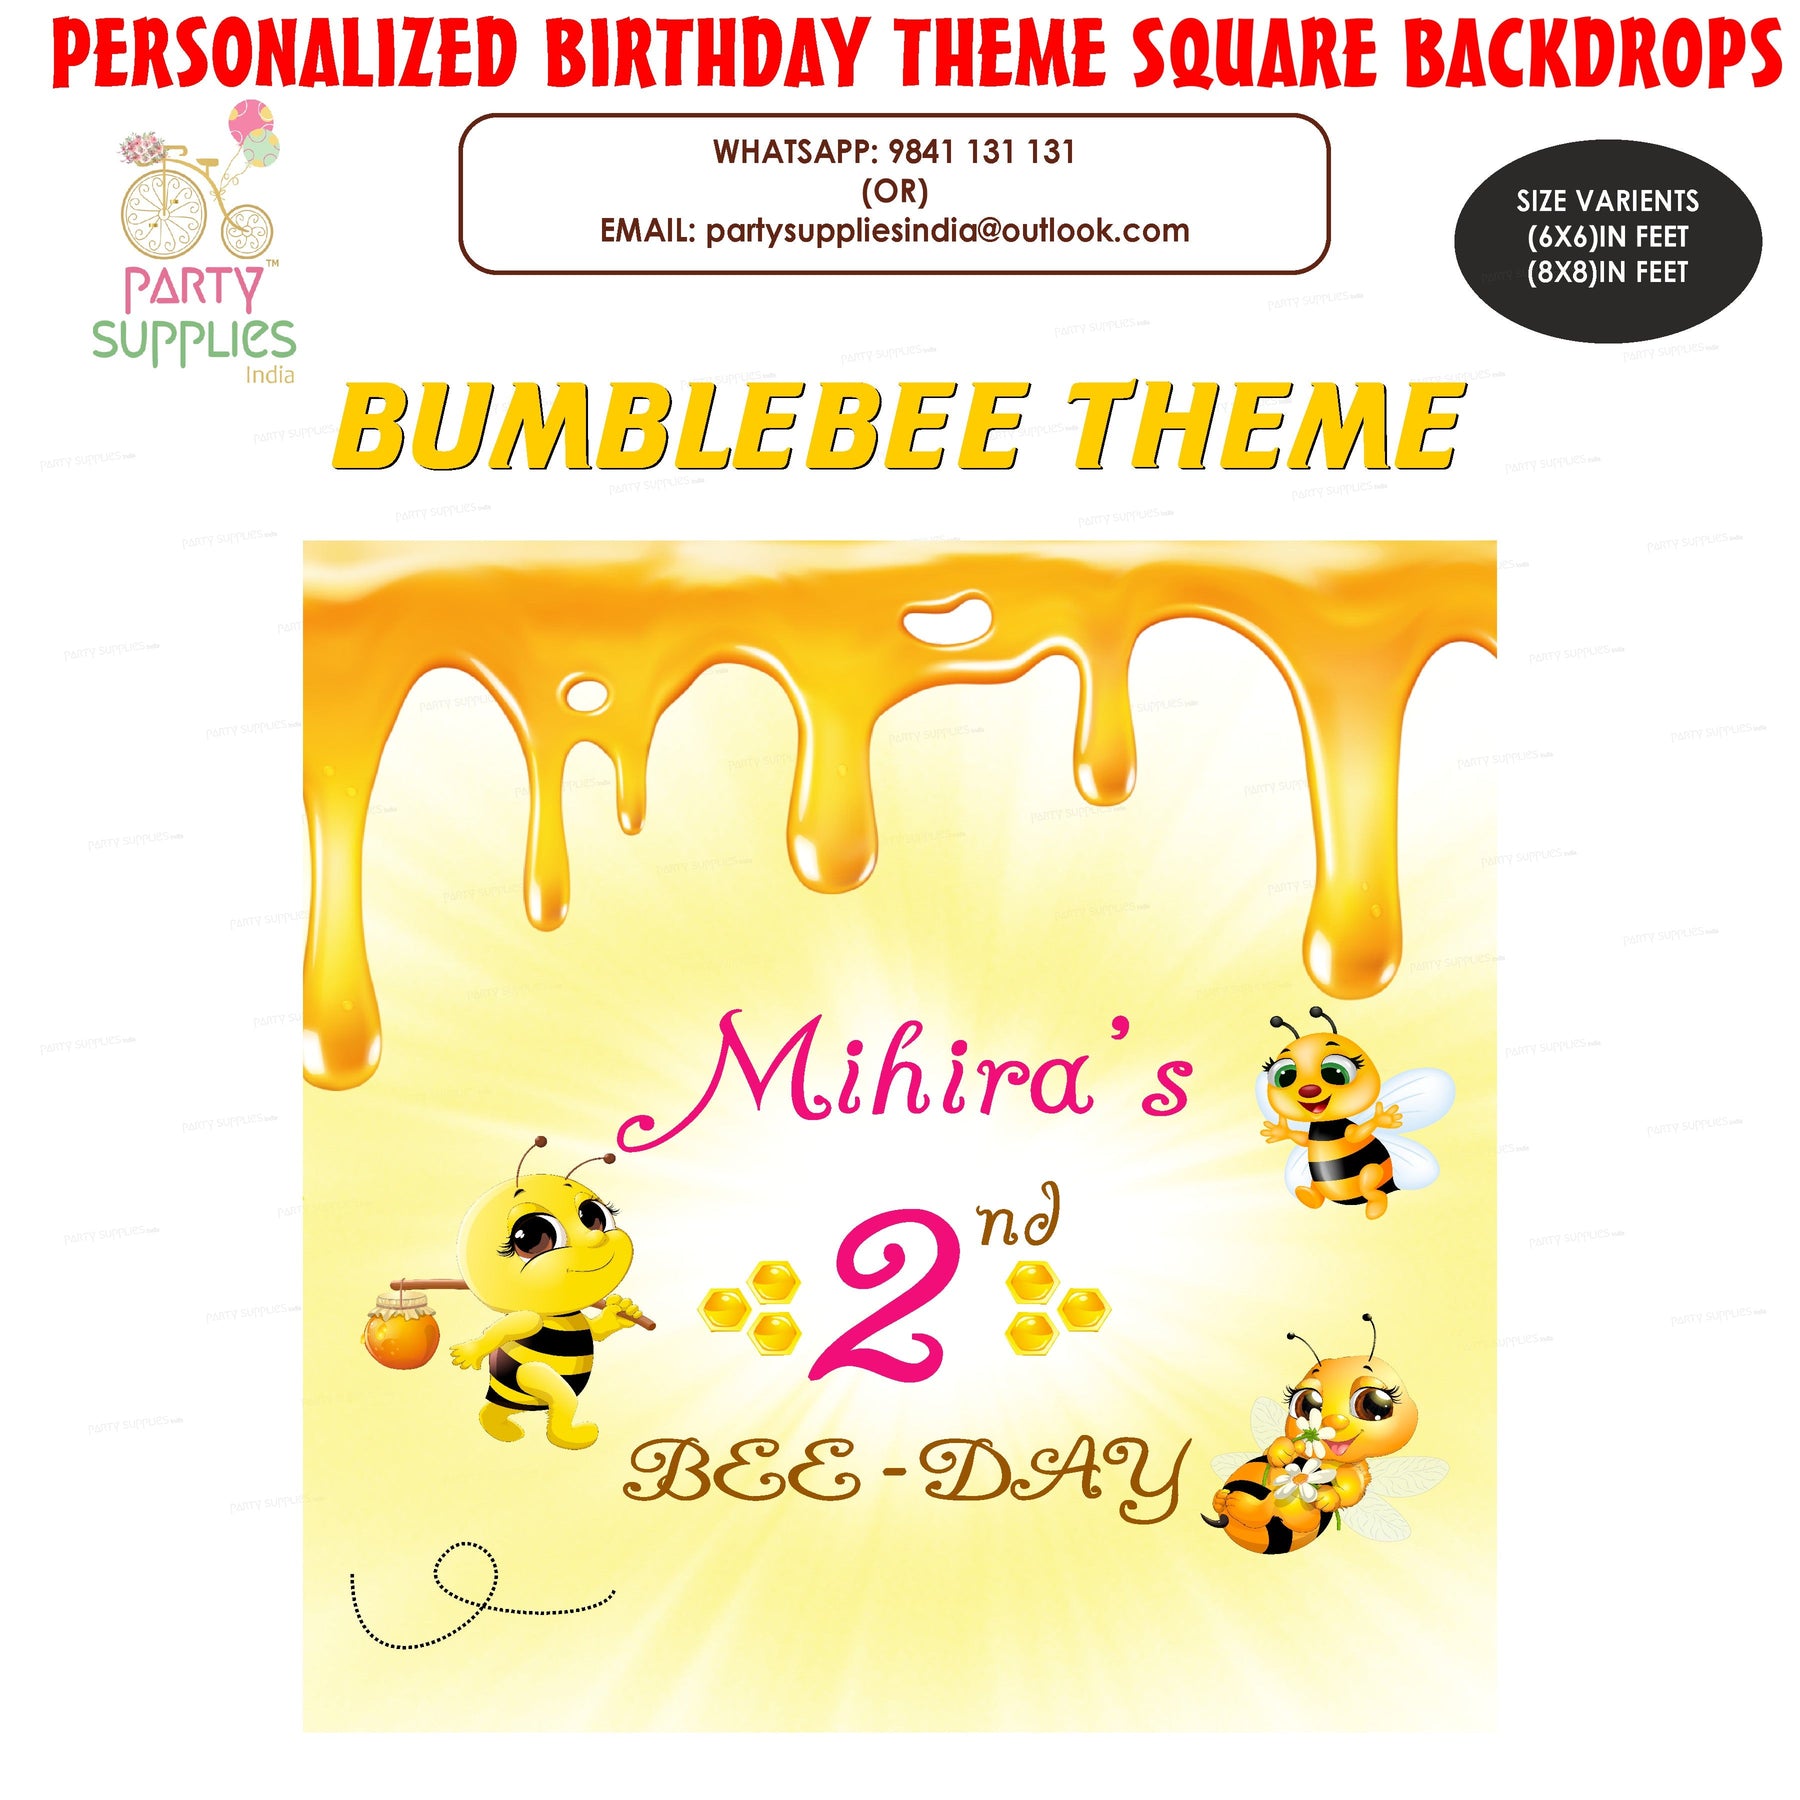 PSI Bumble Bee Theme Square Backdrop